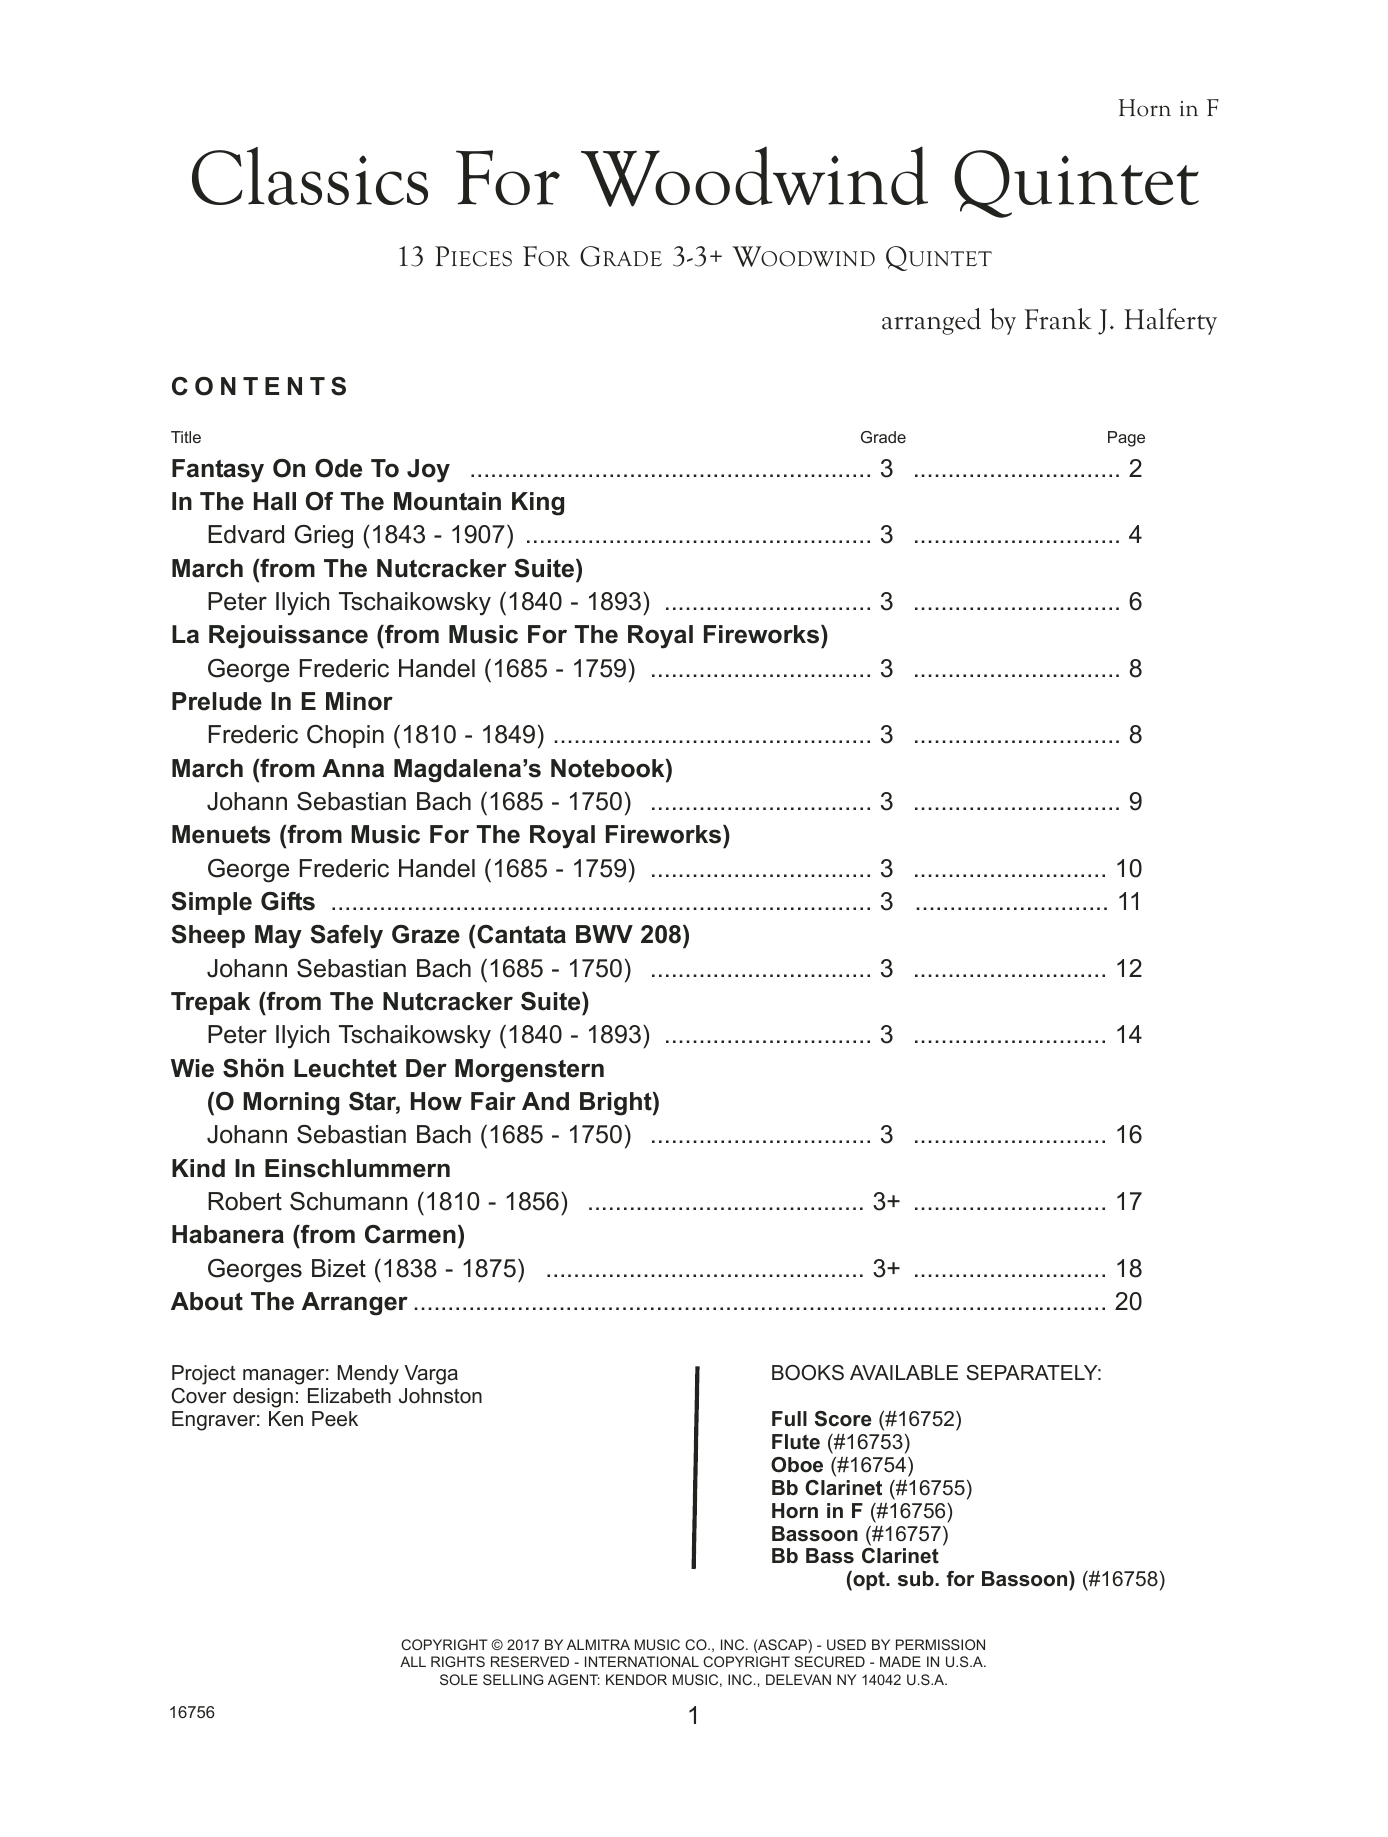 Download Frank J. Halferty Classics For Woodwind Quintet - Horn in Sheet Music